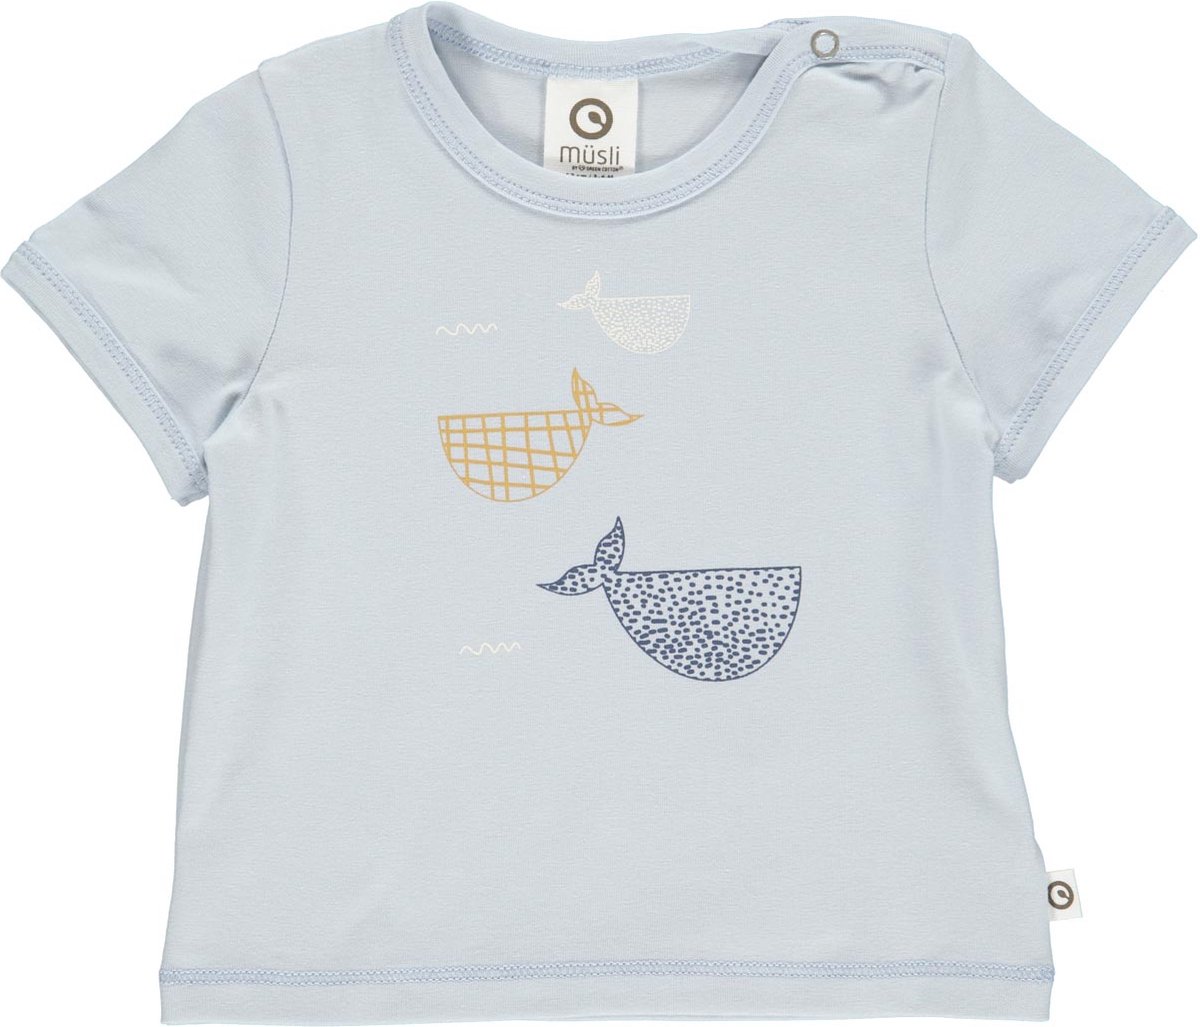 Whale print shirt baby breezy - maat 80